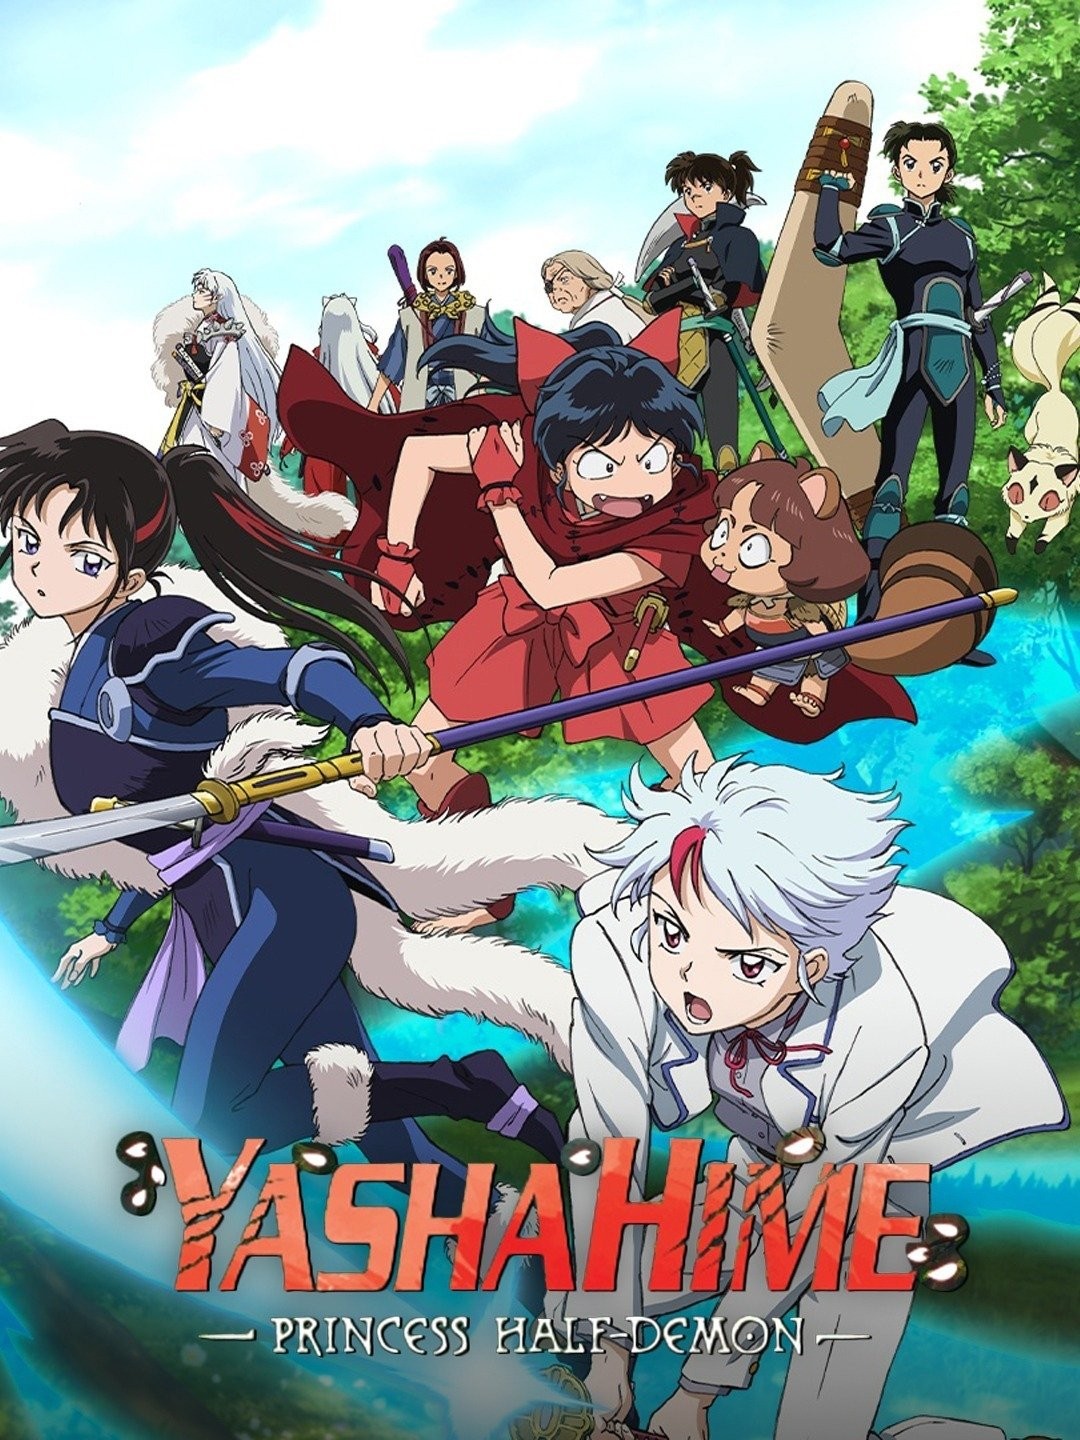 Yashahime: Princess Half-Demon (TV Series 2020– ) - Episode list